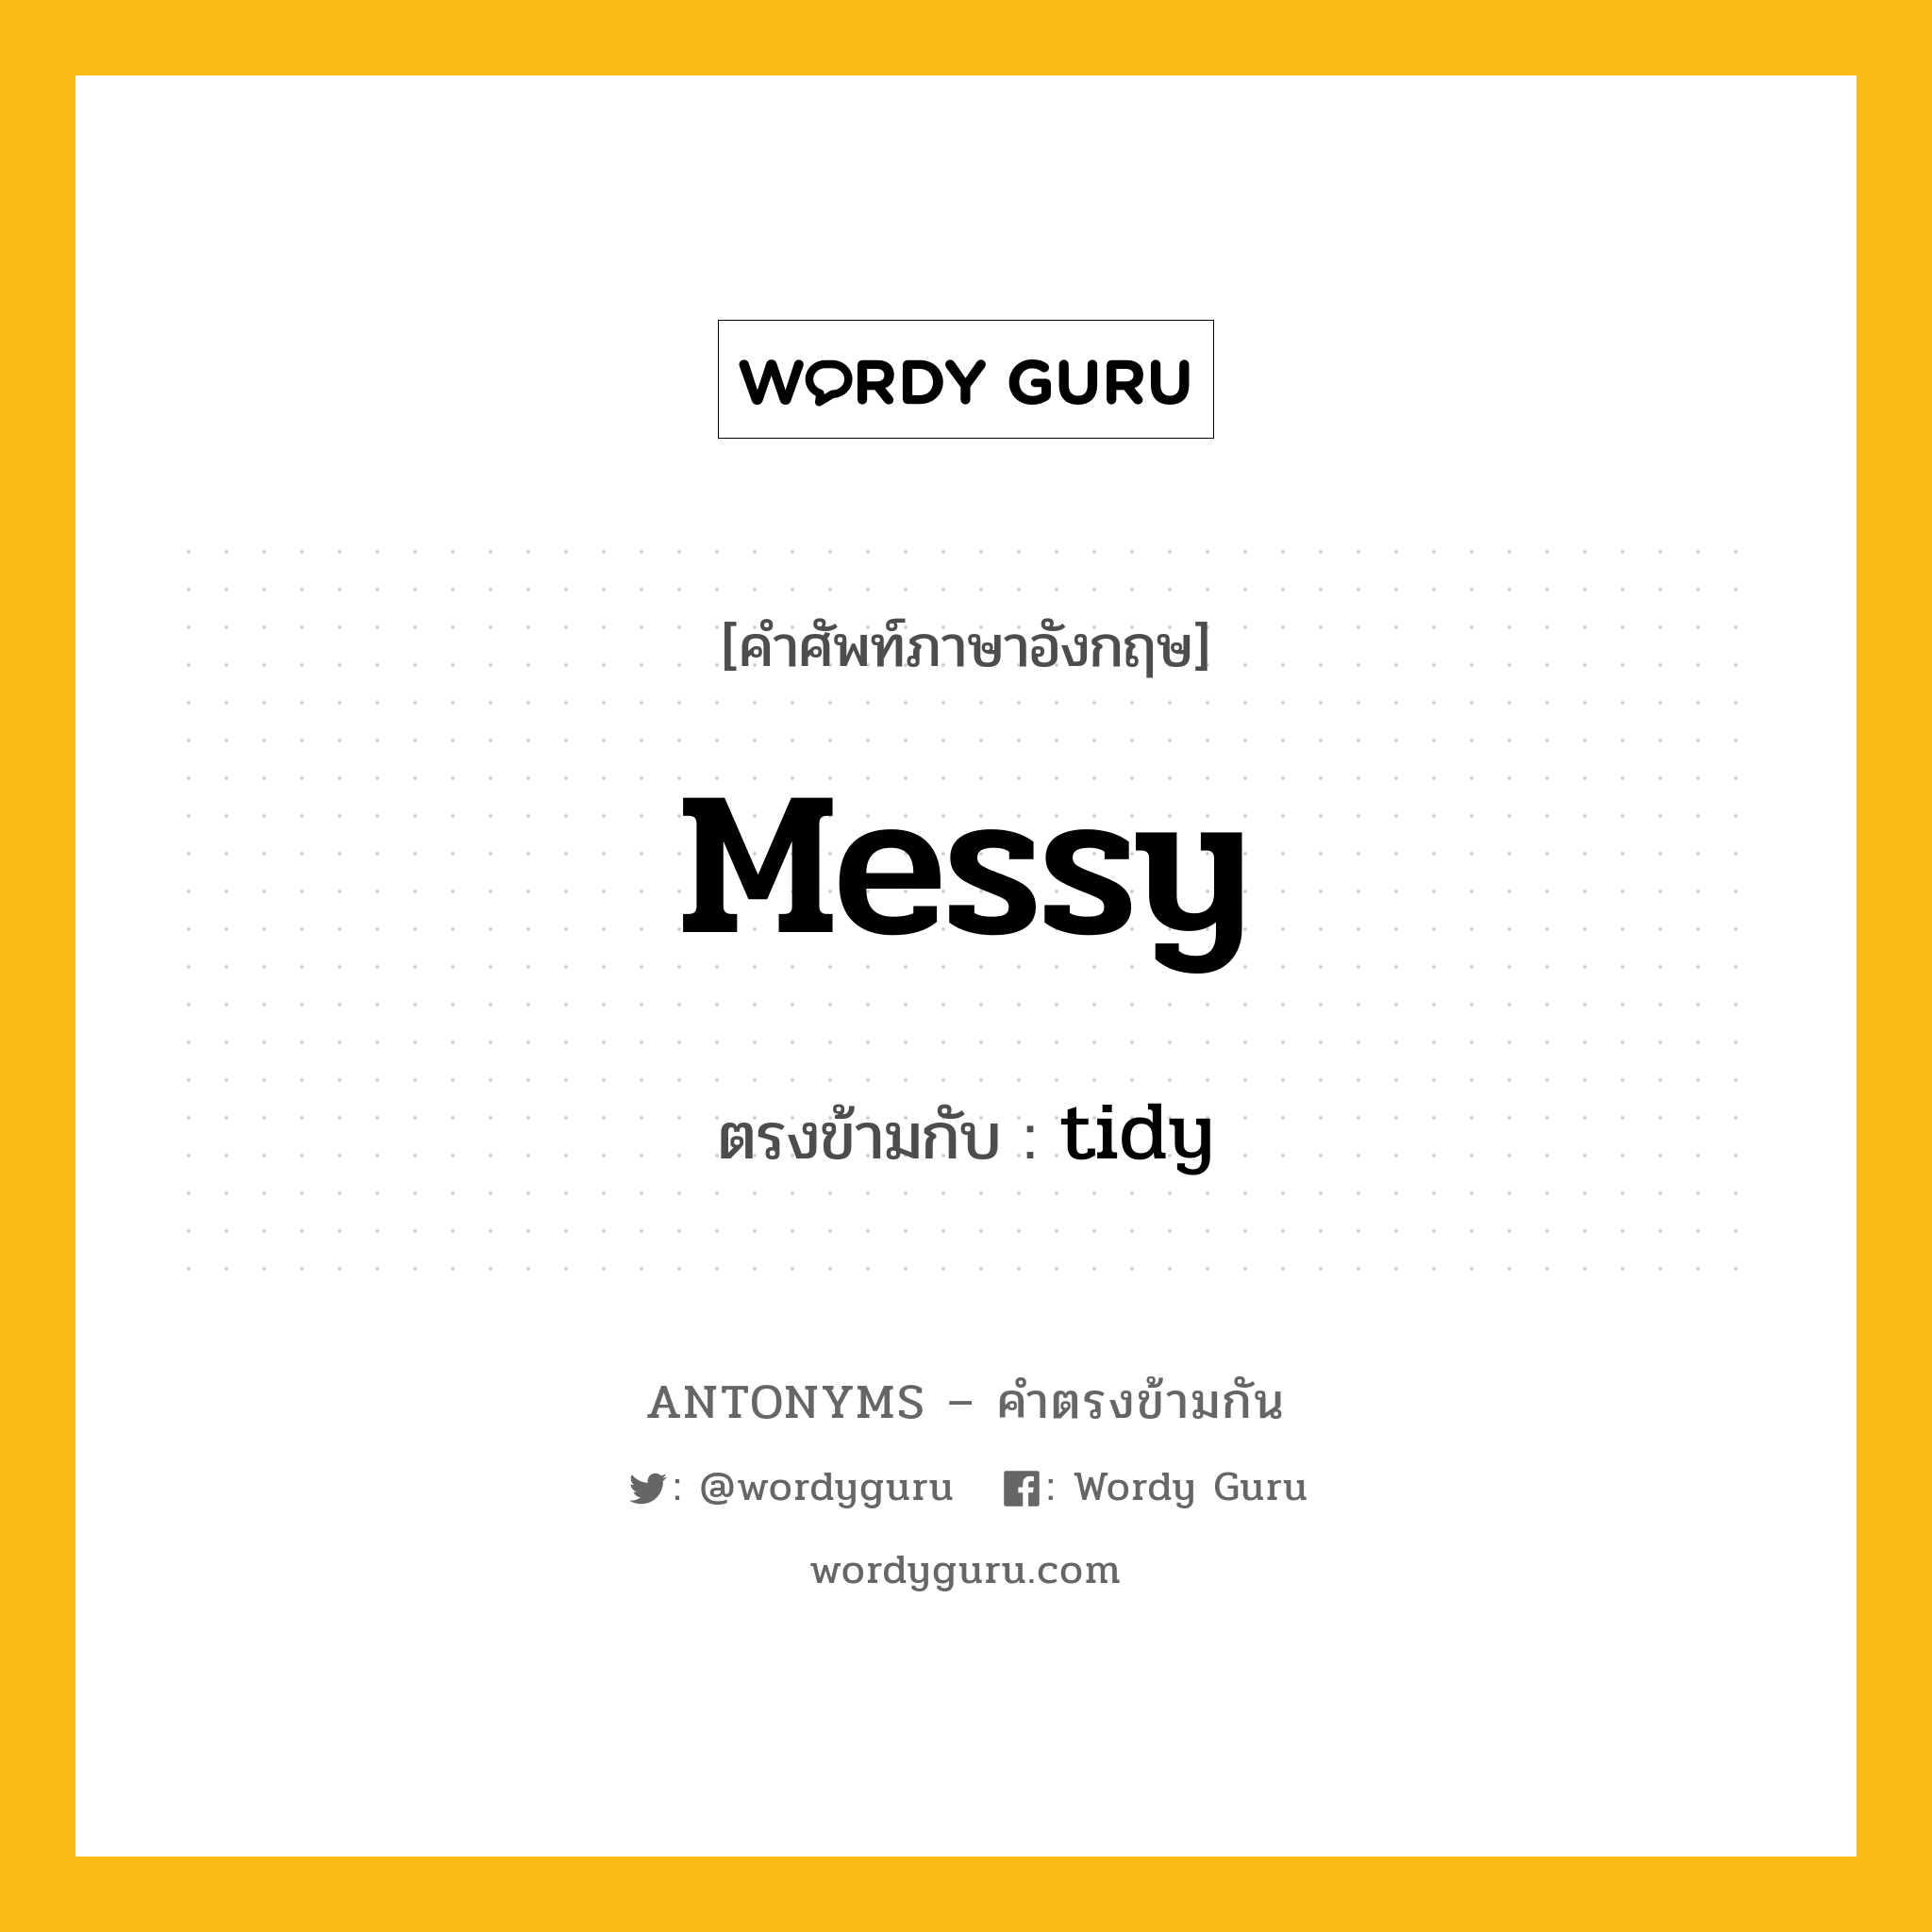 messy เป็นคำตรงข้ามกับคำไหนบ้าง?, คำศัพท์ภาษาอังกฤษ messy ตรงข้ามกับ tidy หมวด tidy